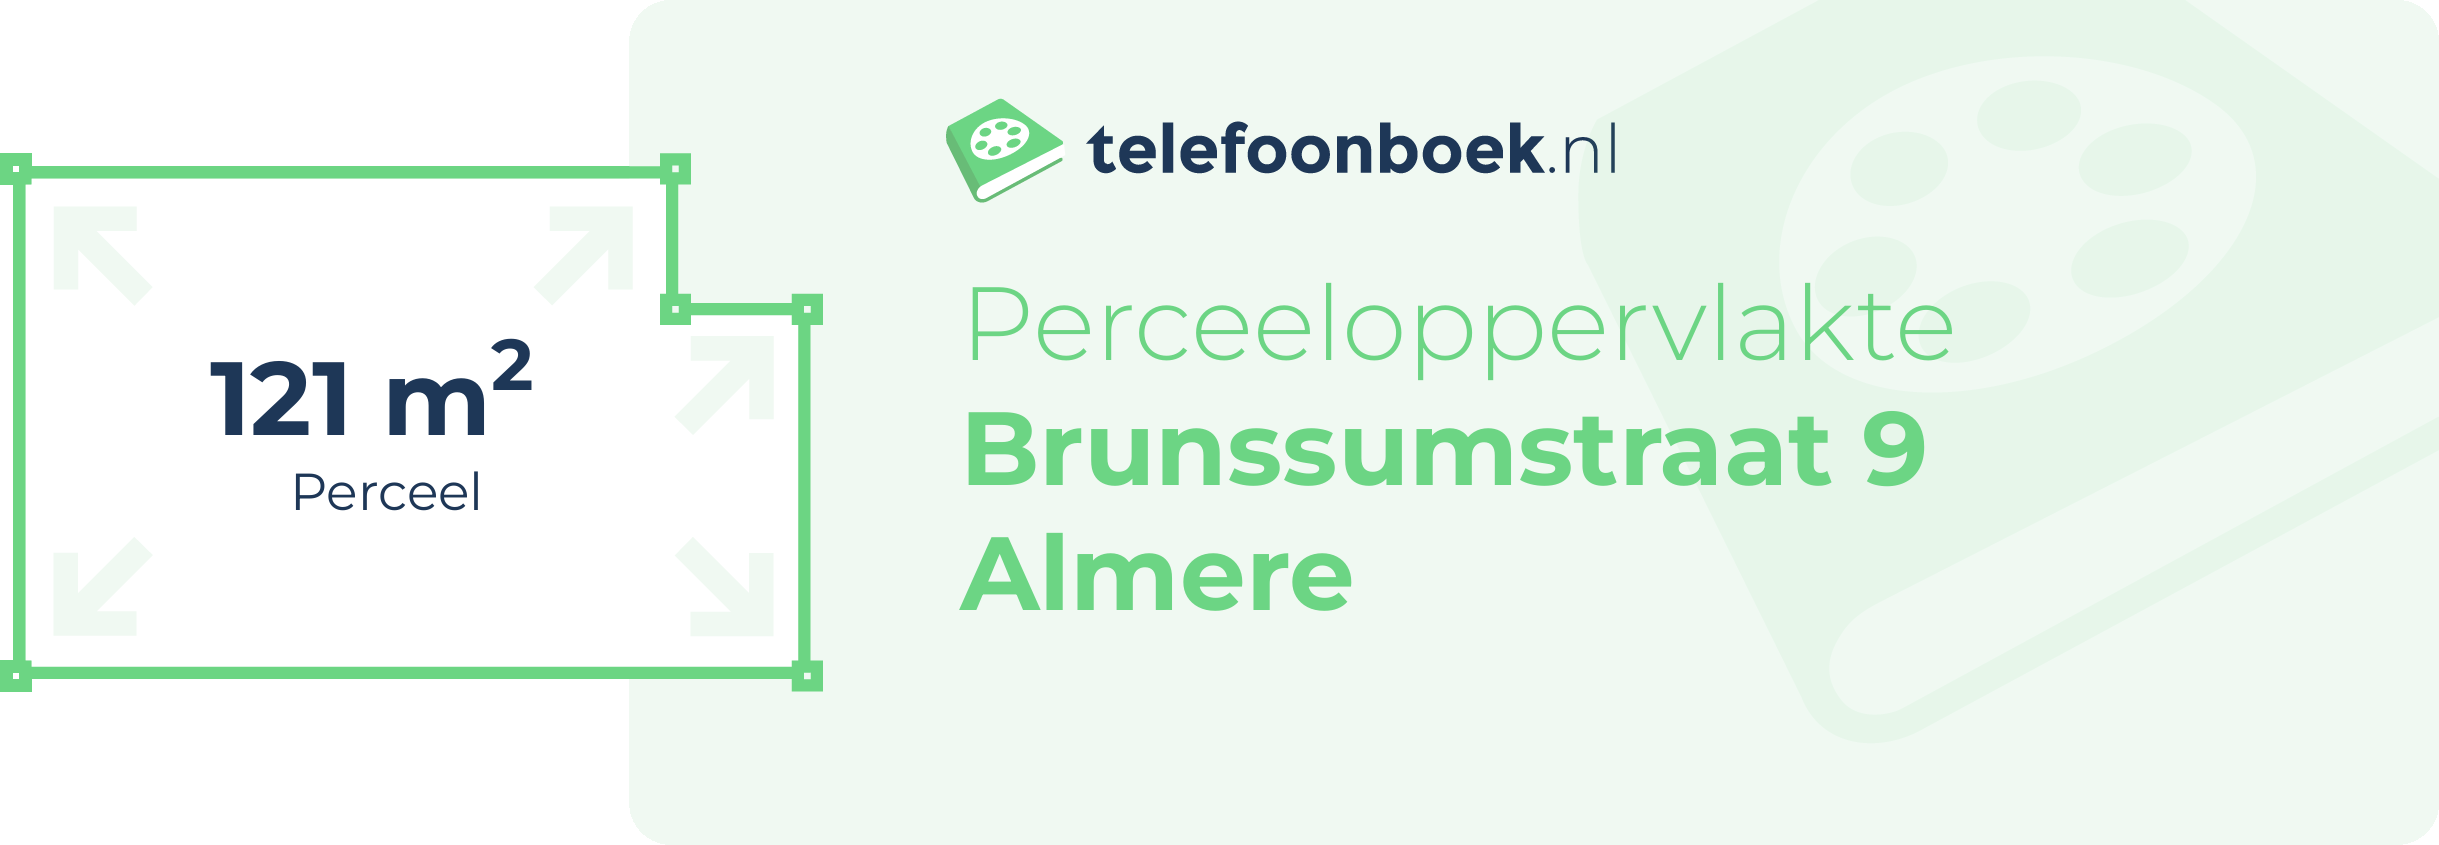 Perceeloppervlakte Brunssumstraat 9 Almere